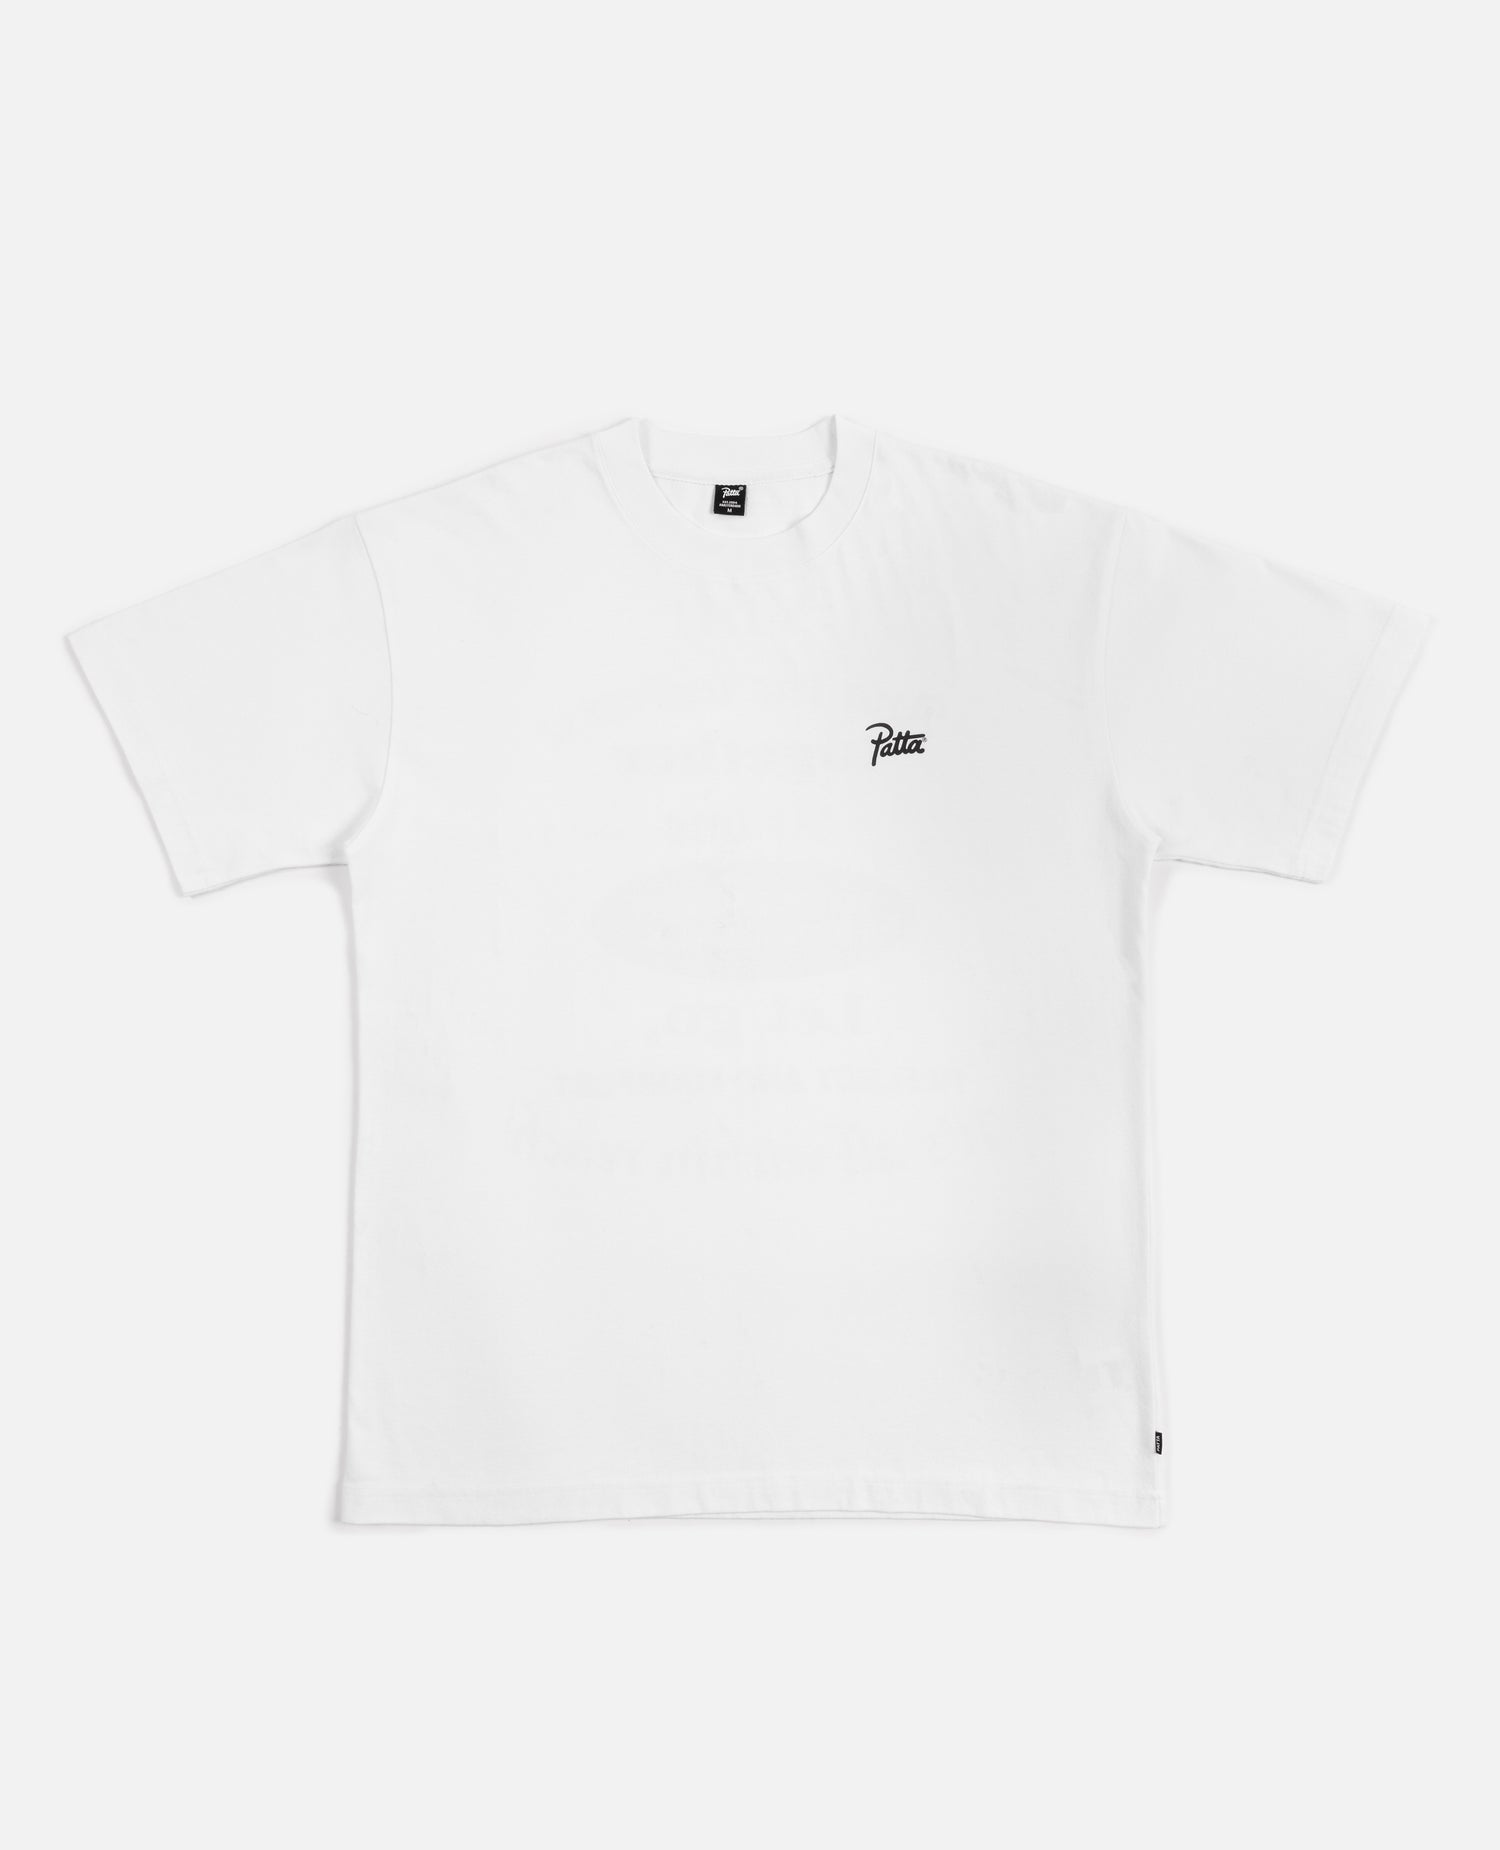 T-shirt délavé Patta Reflect And Manifest (blanc)